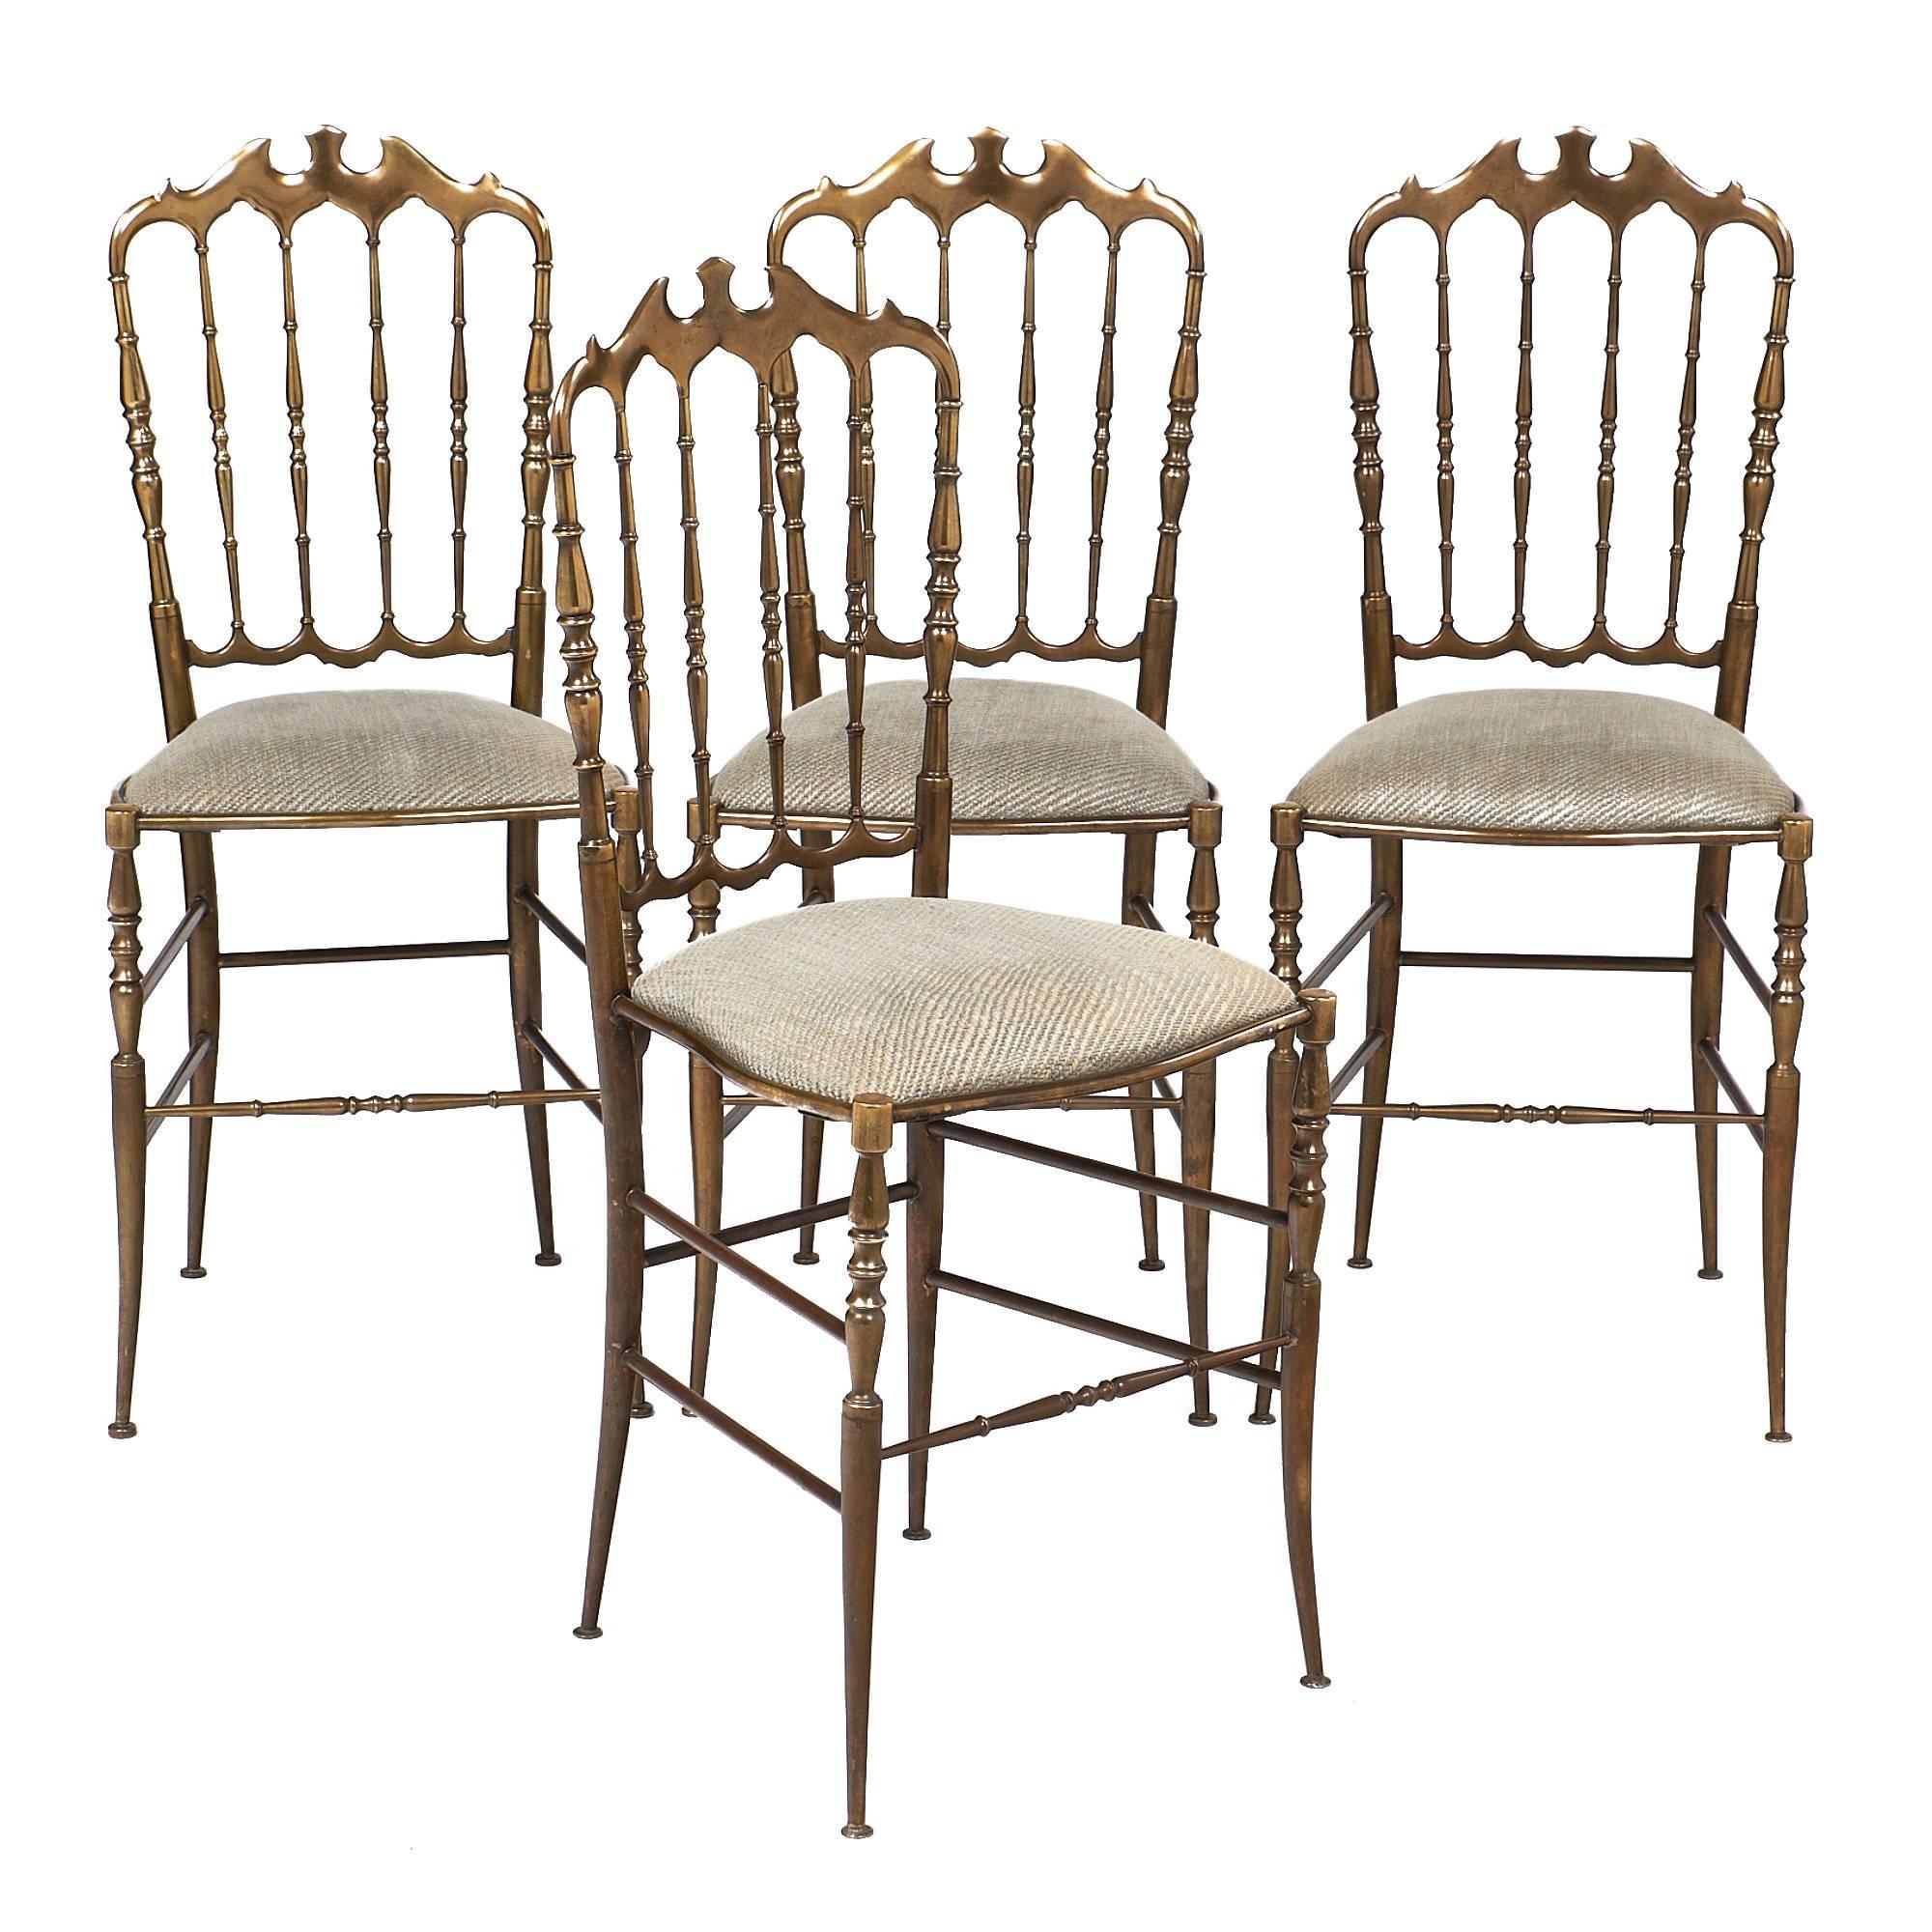 Four Vintage Brass Chiavari Chairs